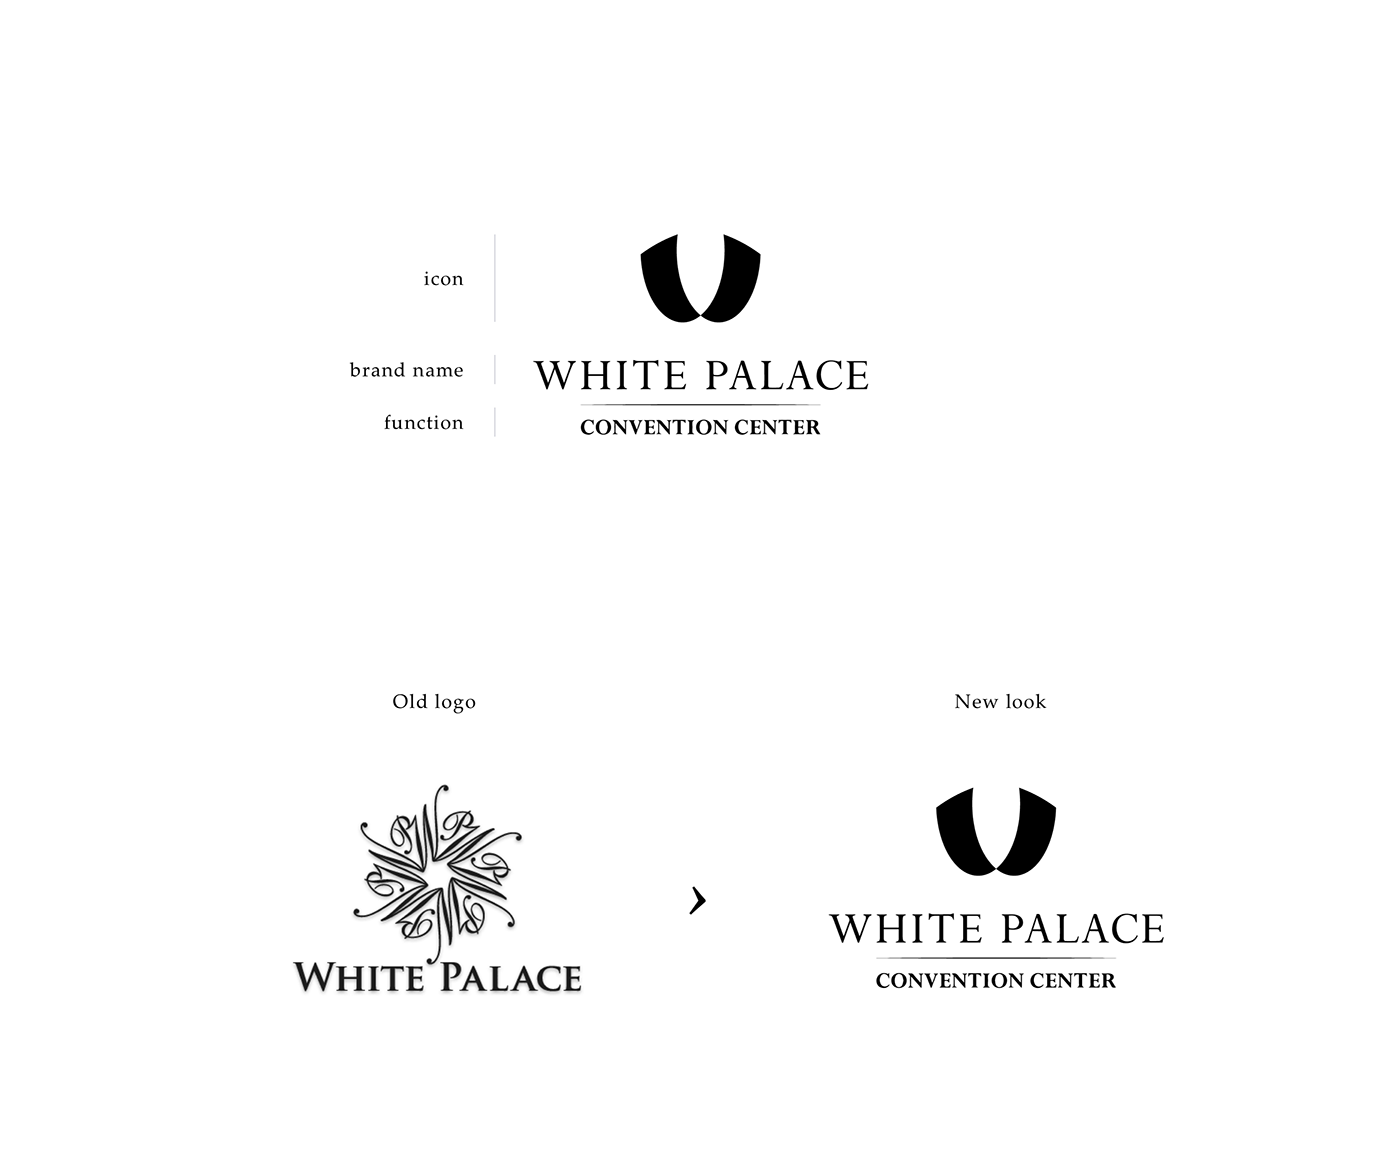 Palace Logo Roblox White